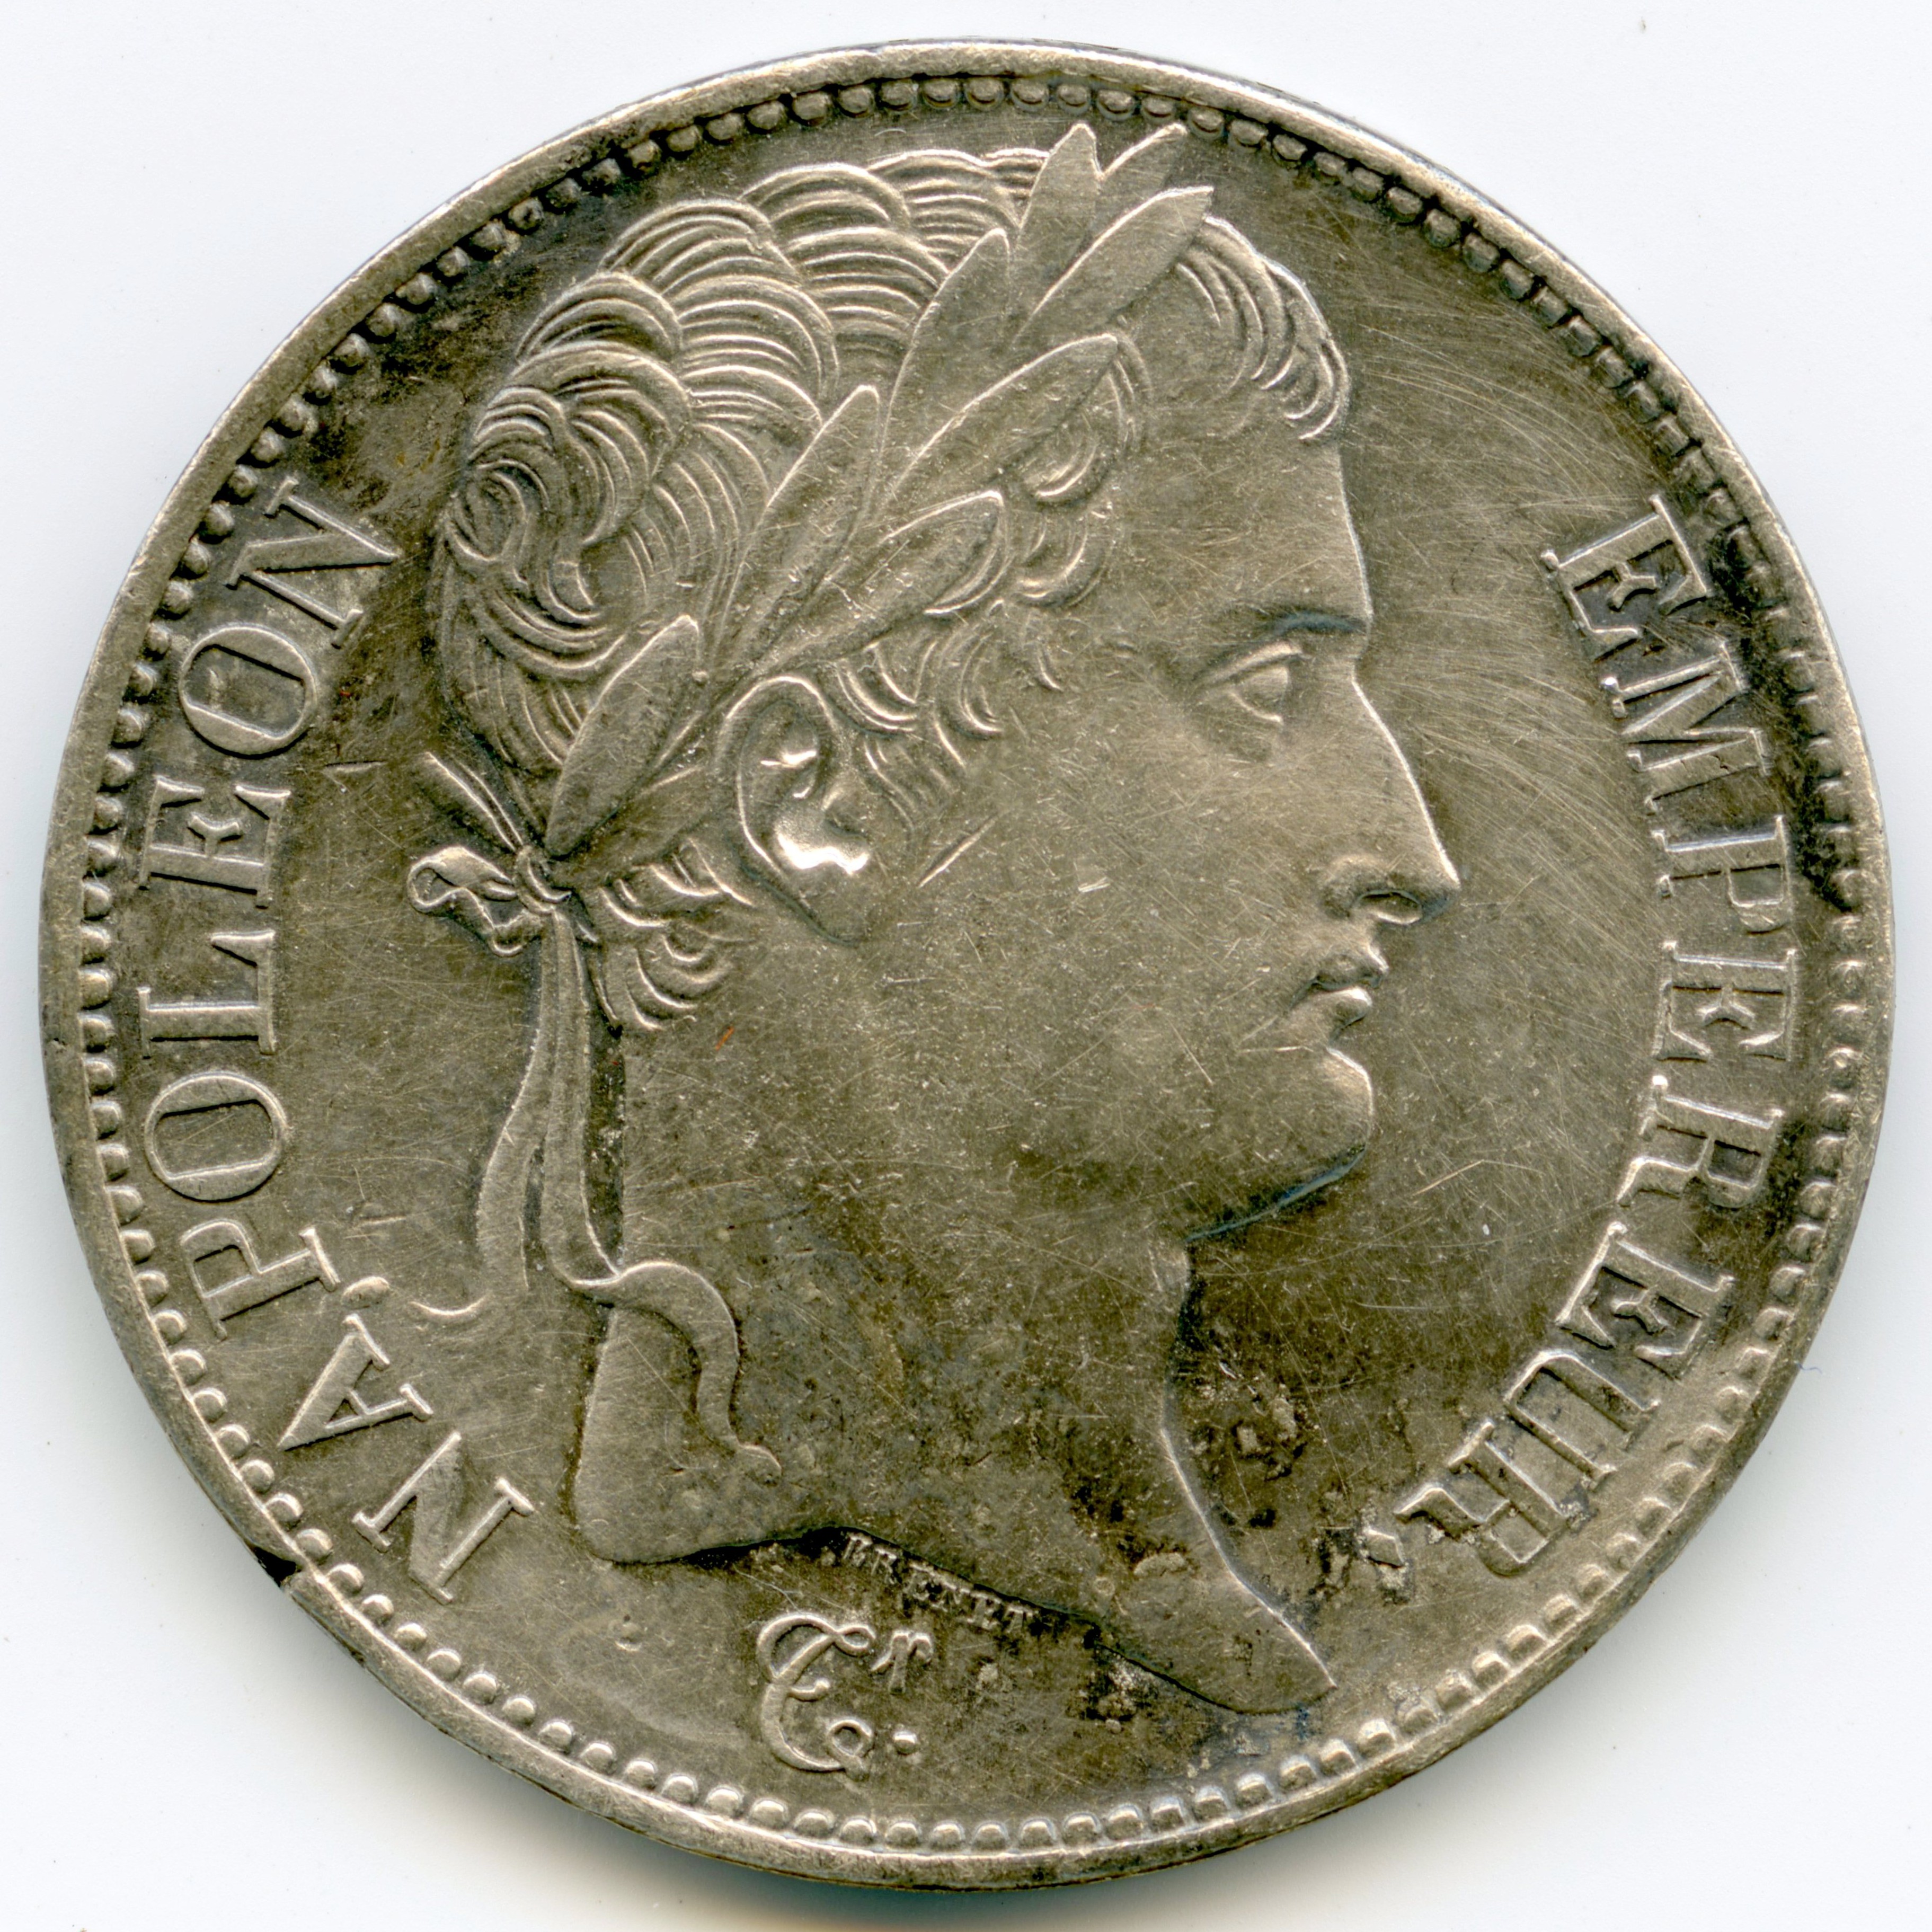 Napoléon Ier - 5 Francs - 1809 - Rouen avers